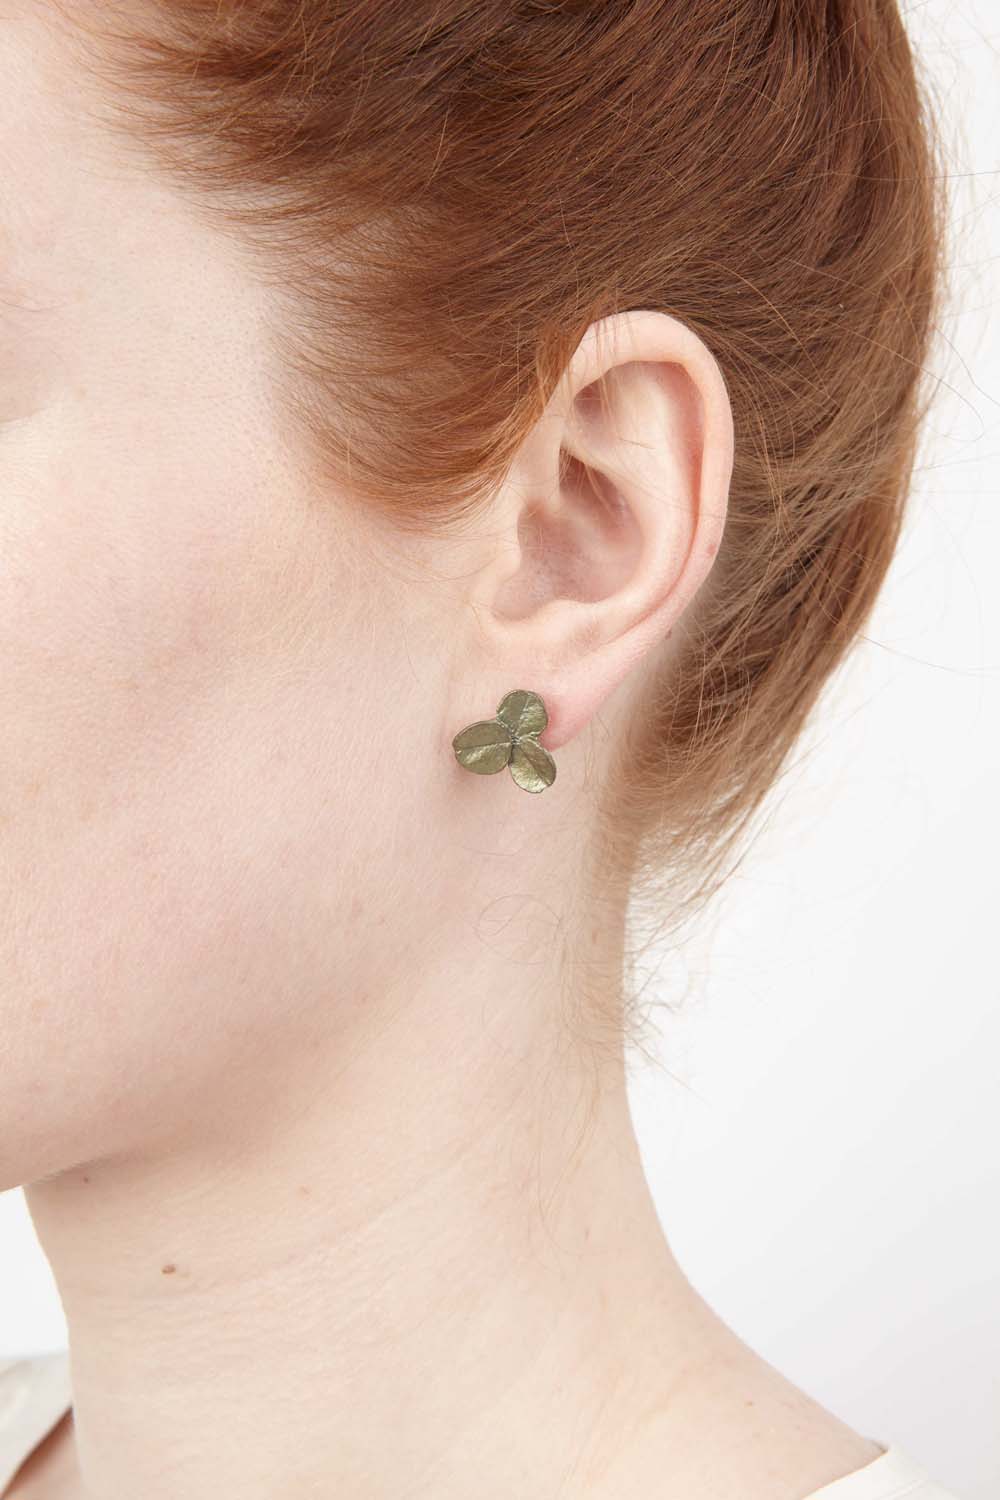 Clover Leaf Earrings - The Nancy Smillie Shop - Art, Jewellery & Designer Gifts Glasgow